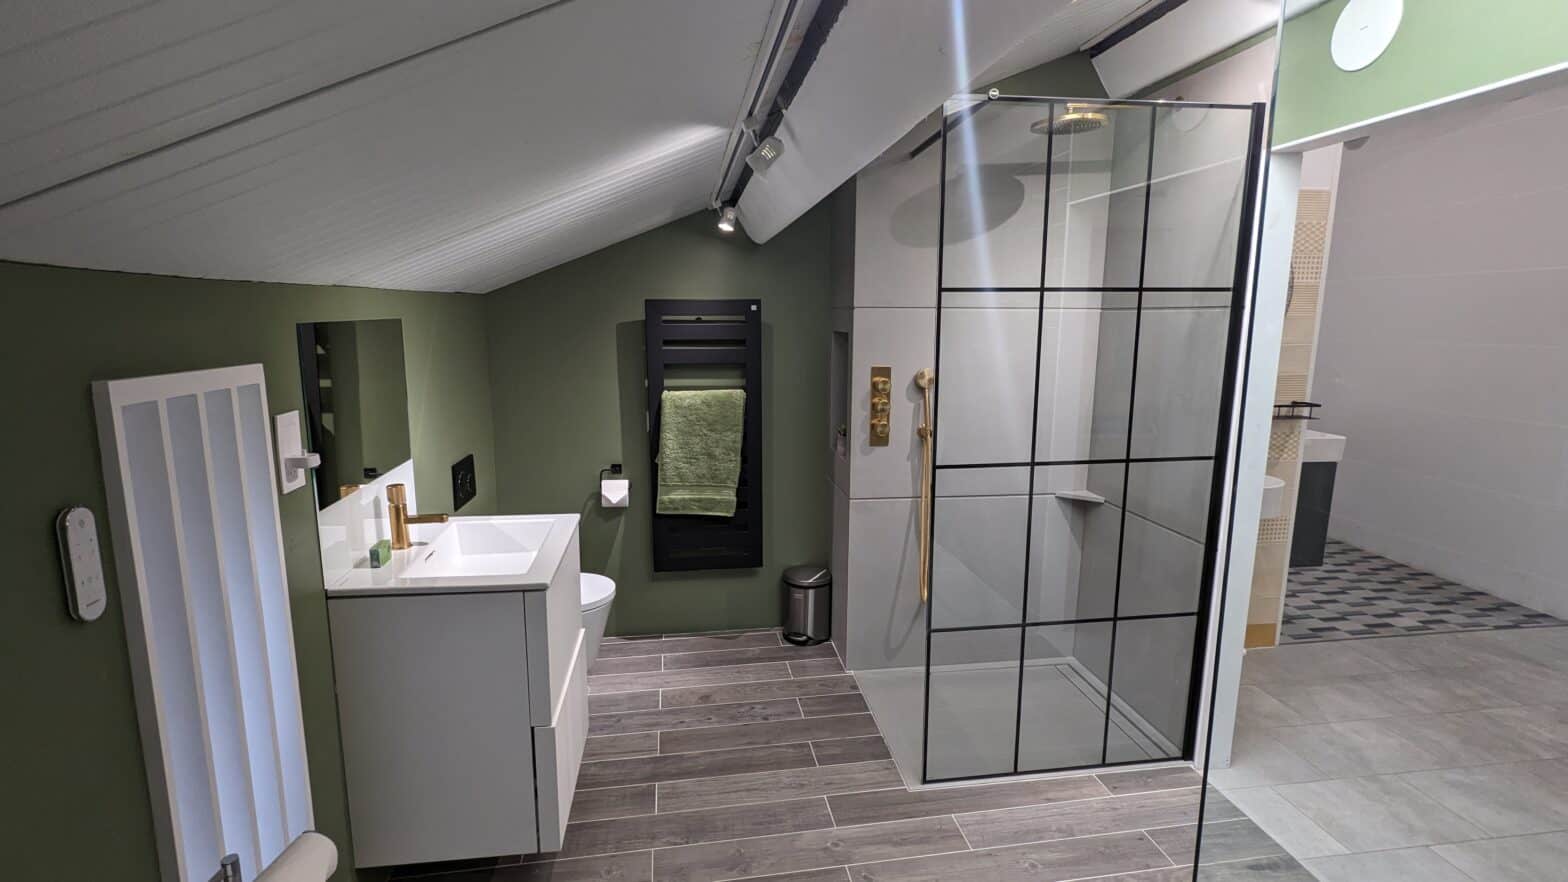 Display – Green and brass bathroom